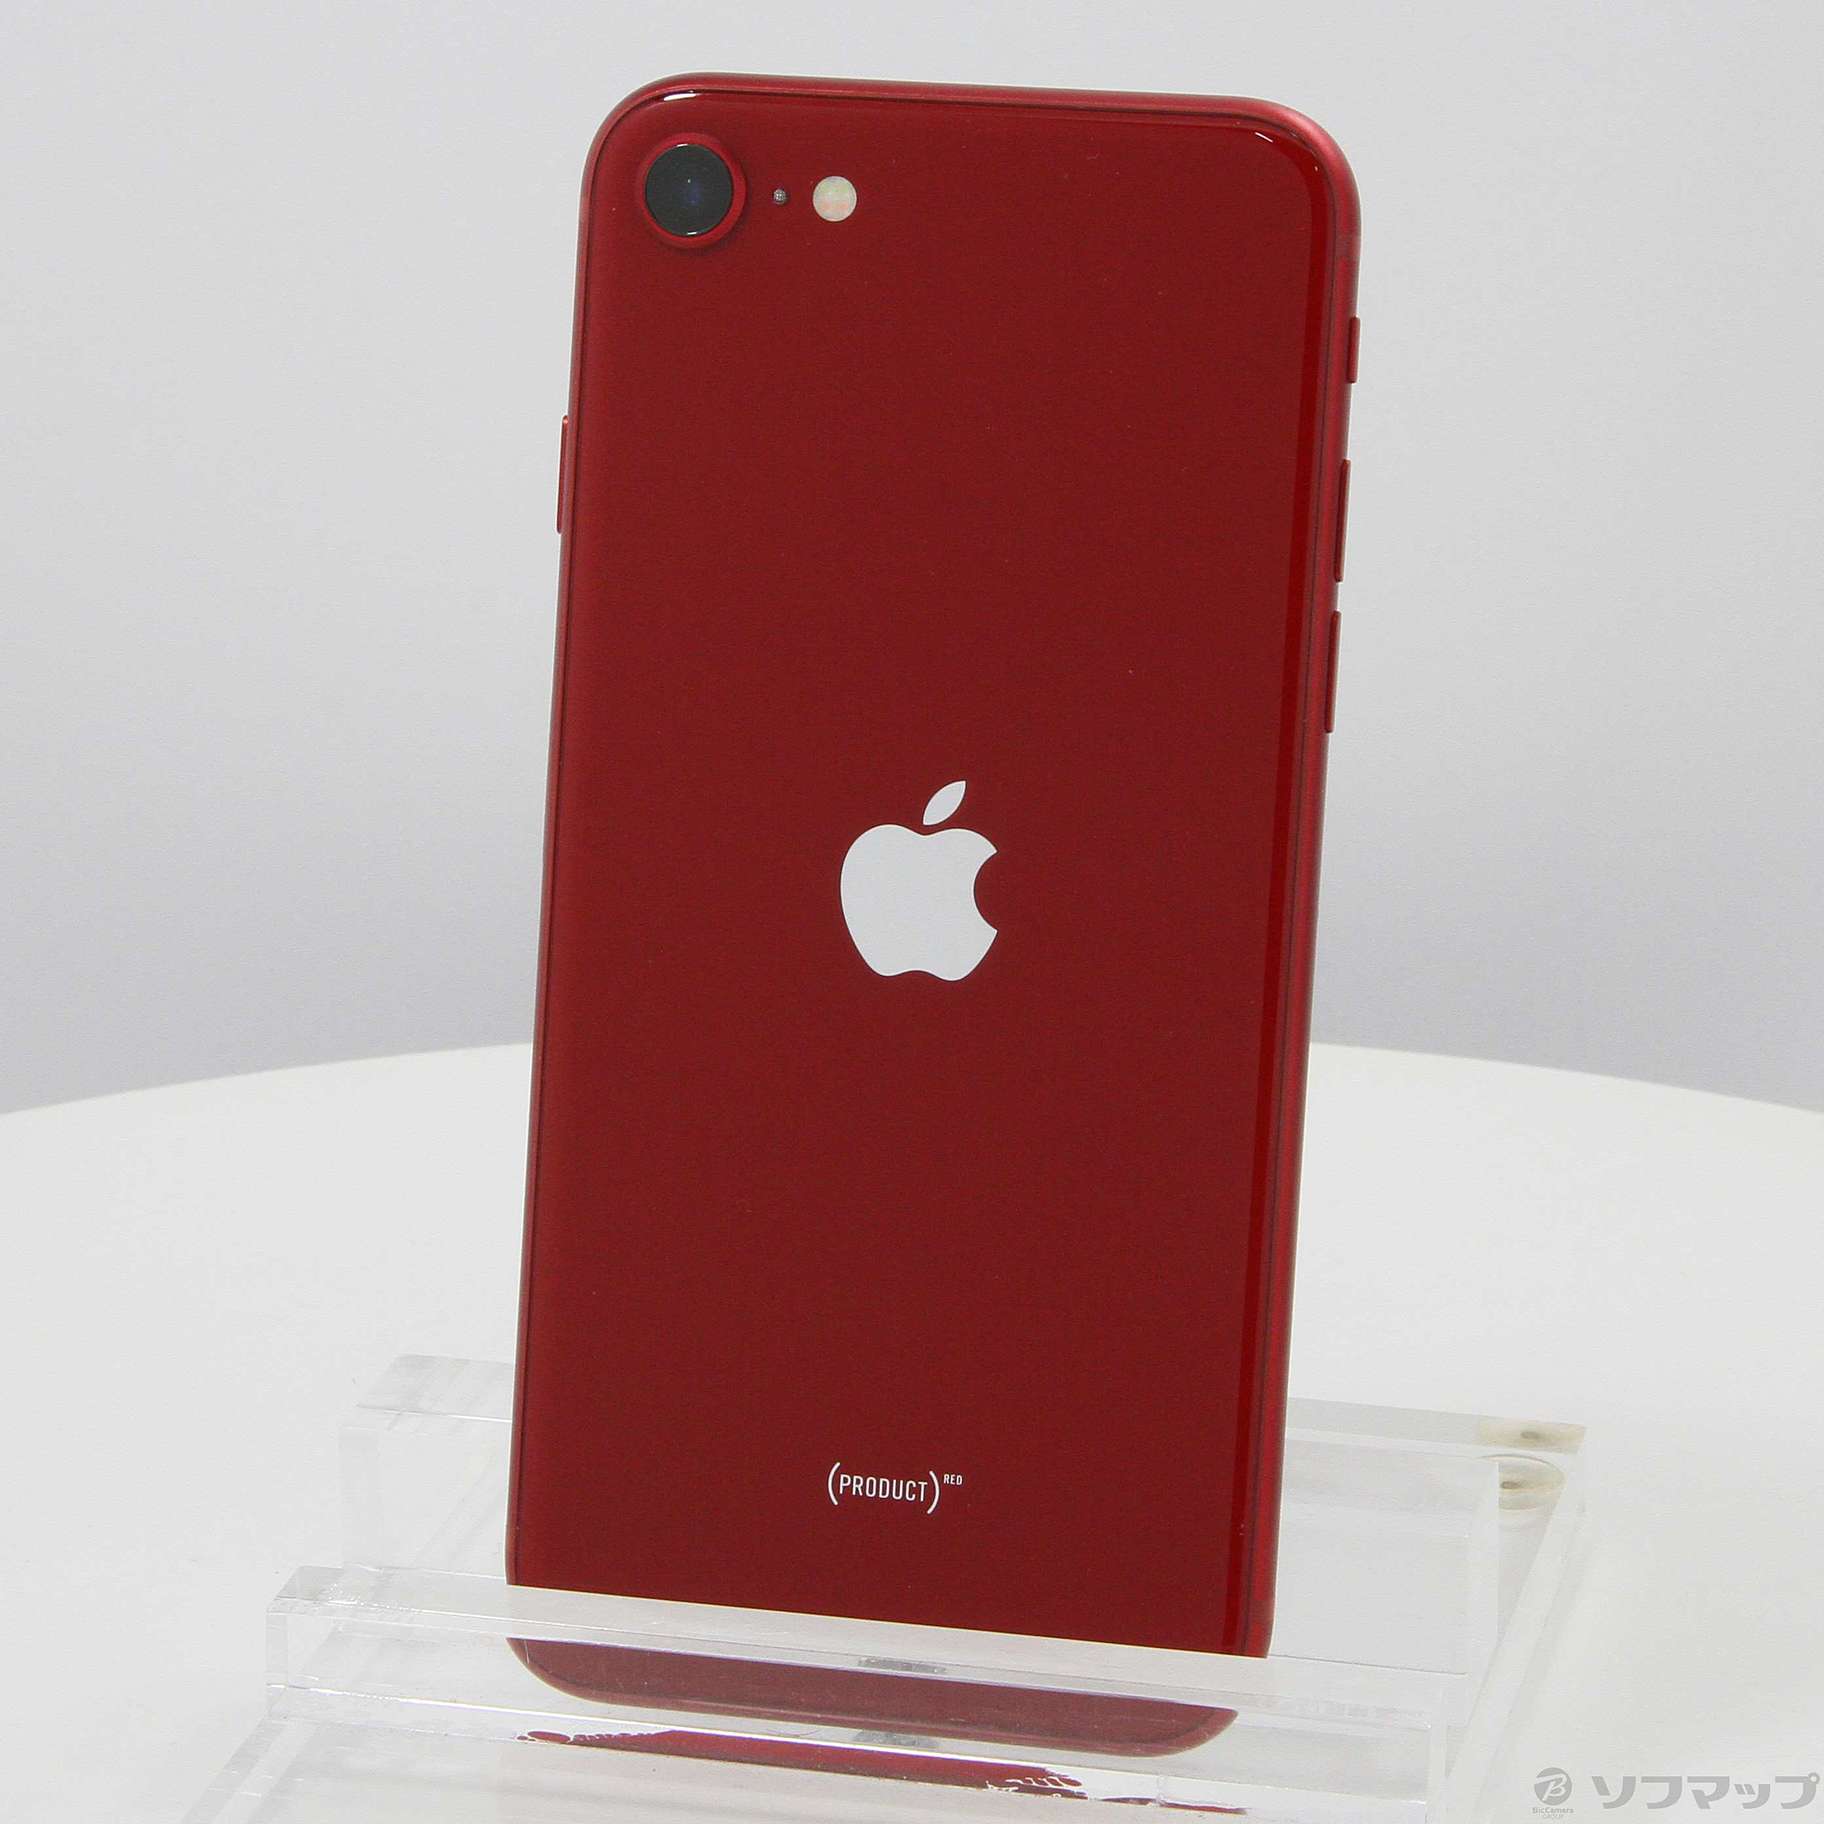 iPhone SE 128gb (第2世代) 赤 レッド